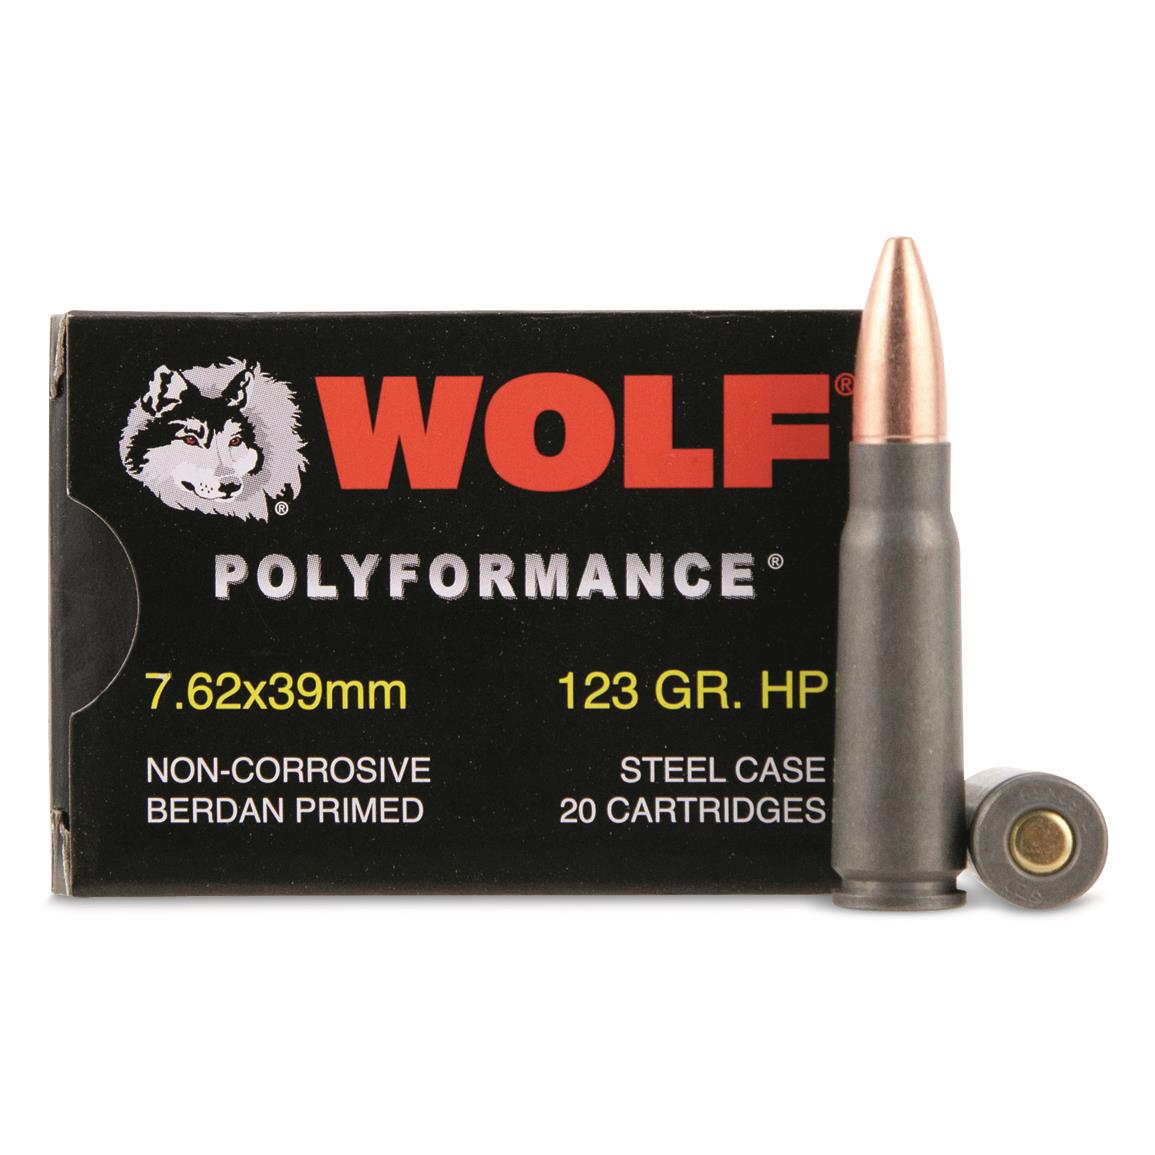 Wolf WPA Polyformance, 7.62x39mm, HP, 123 Grain, 20 Rounds